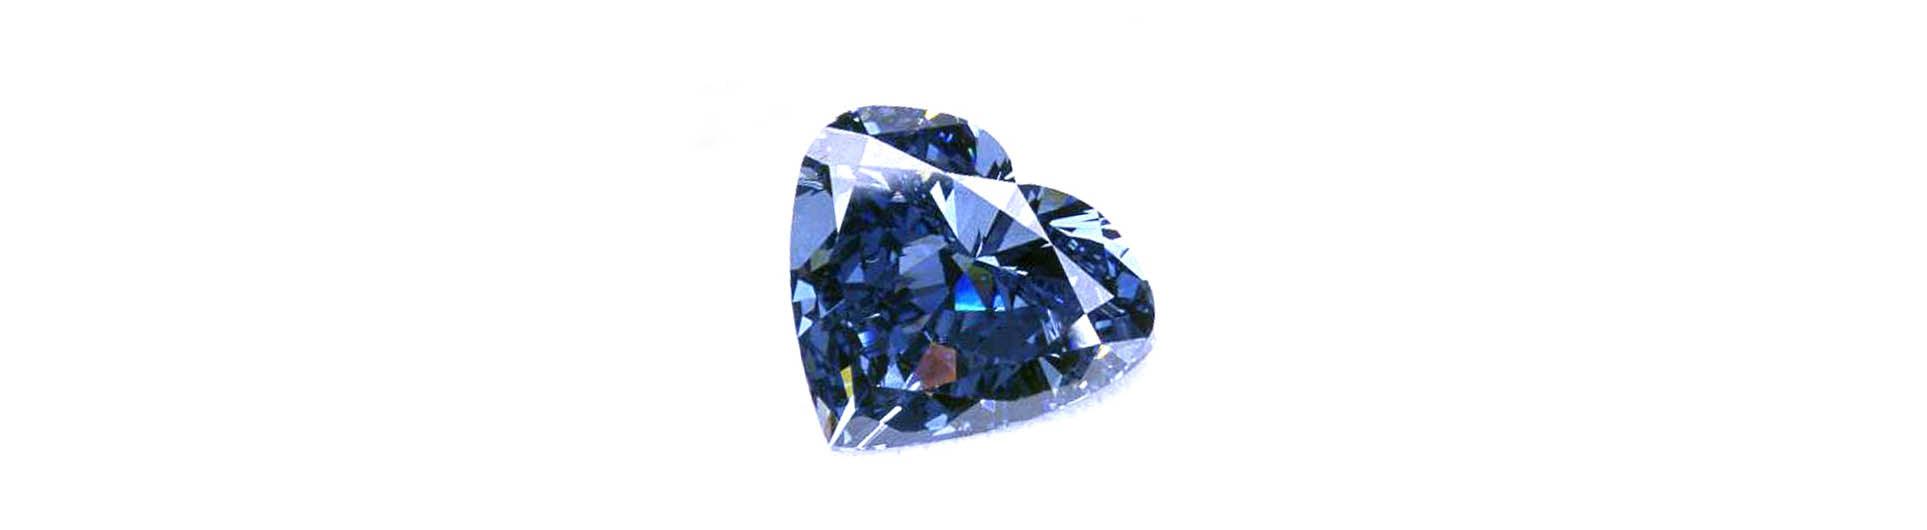 Most Expensive Diamonds  The Heart of Eternity - No.8 - Monroe Yorke Diamonds